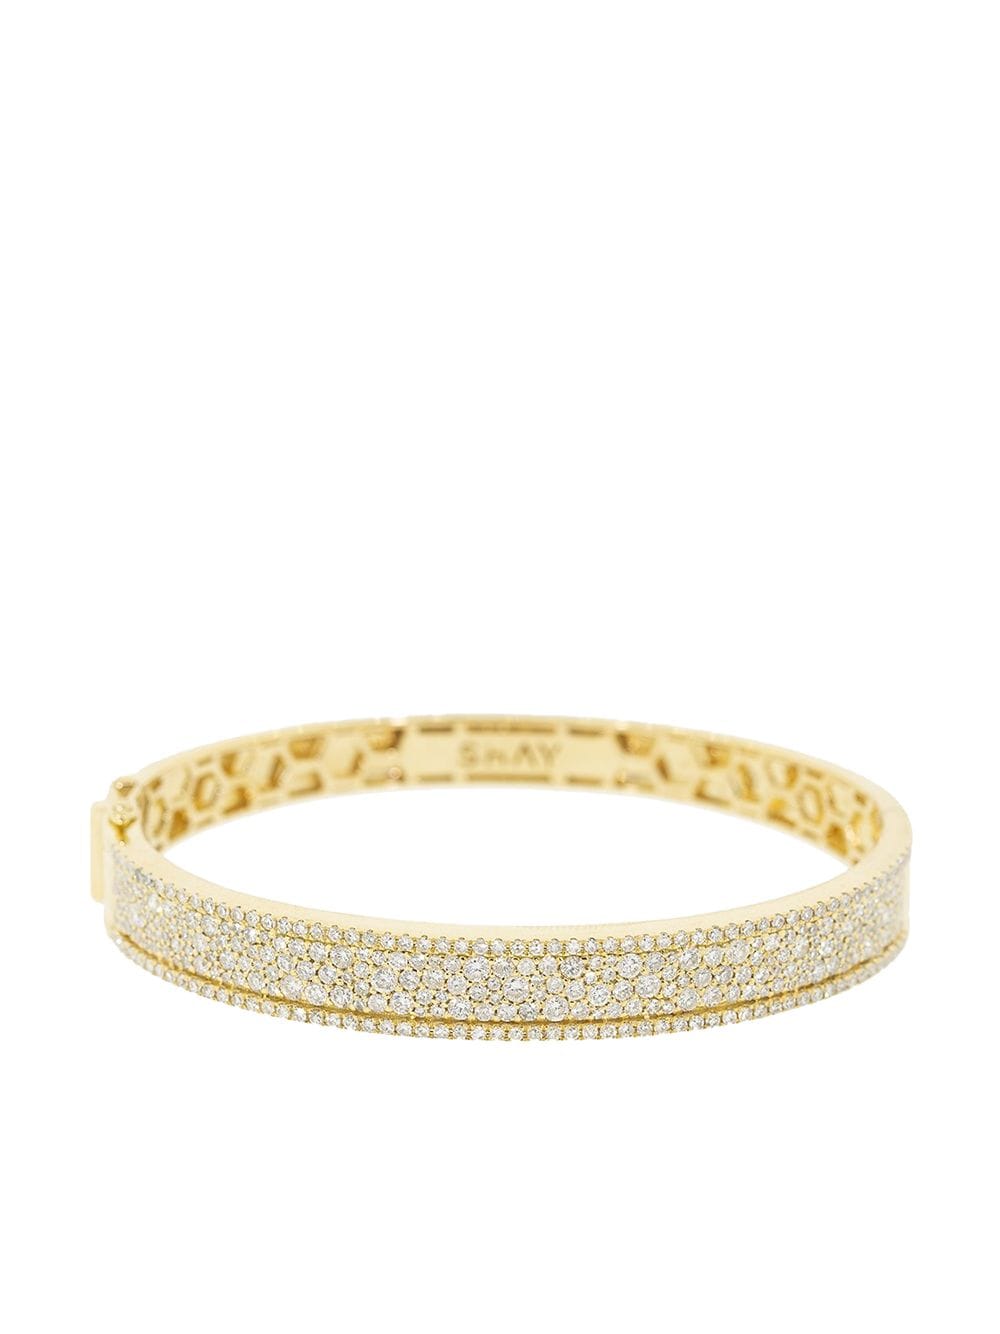 18kt yellow gold diamond Nameplate bangle bracelet